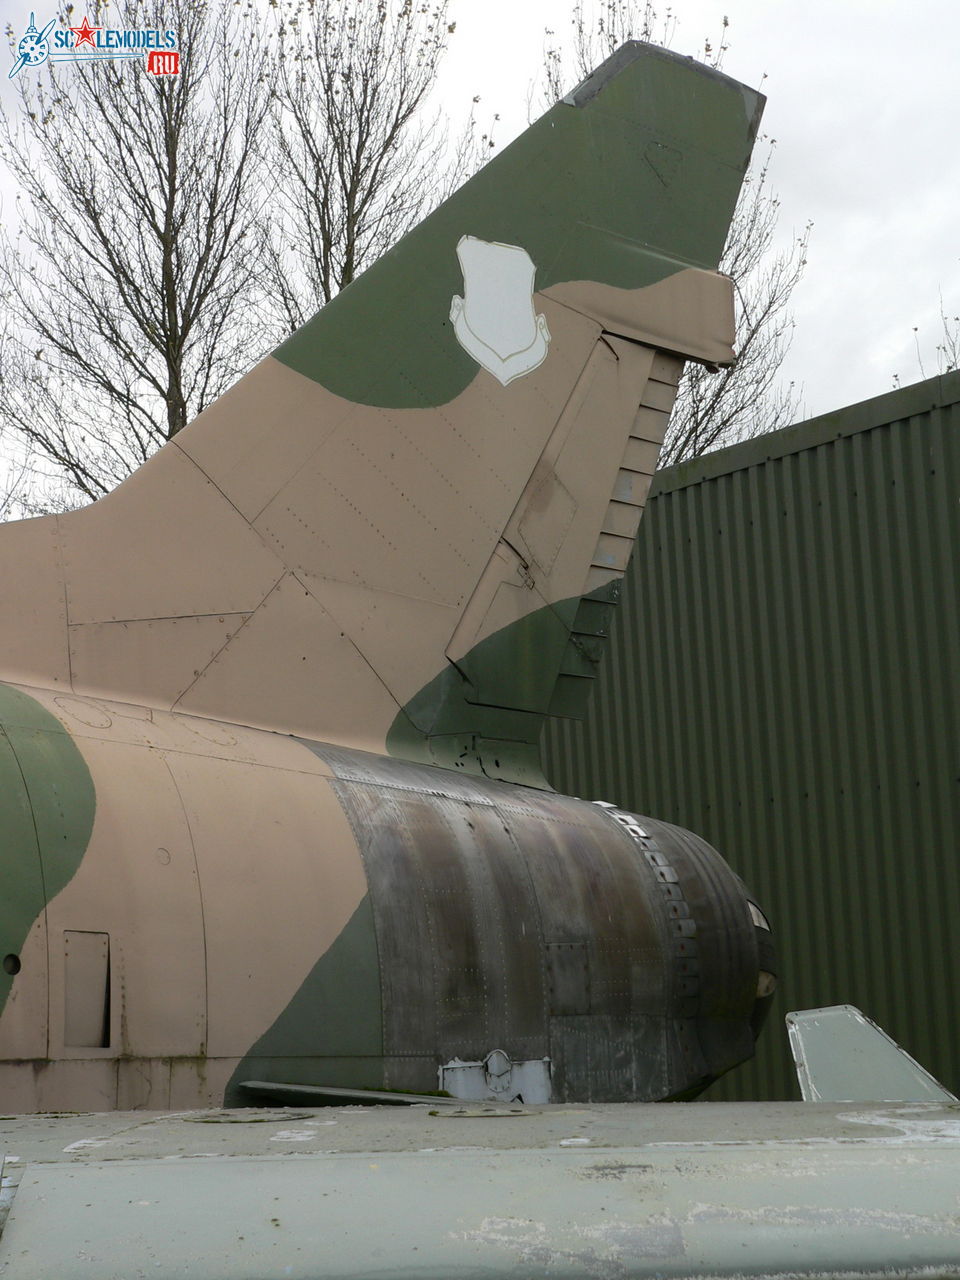 F-100D Newark RAF Museum (12).jpg